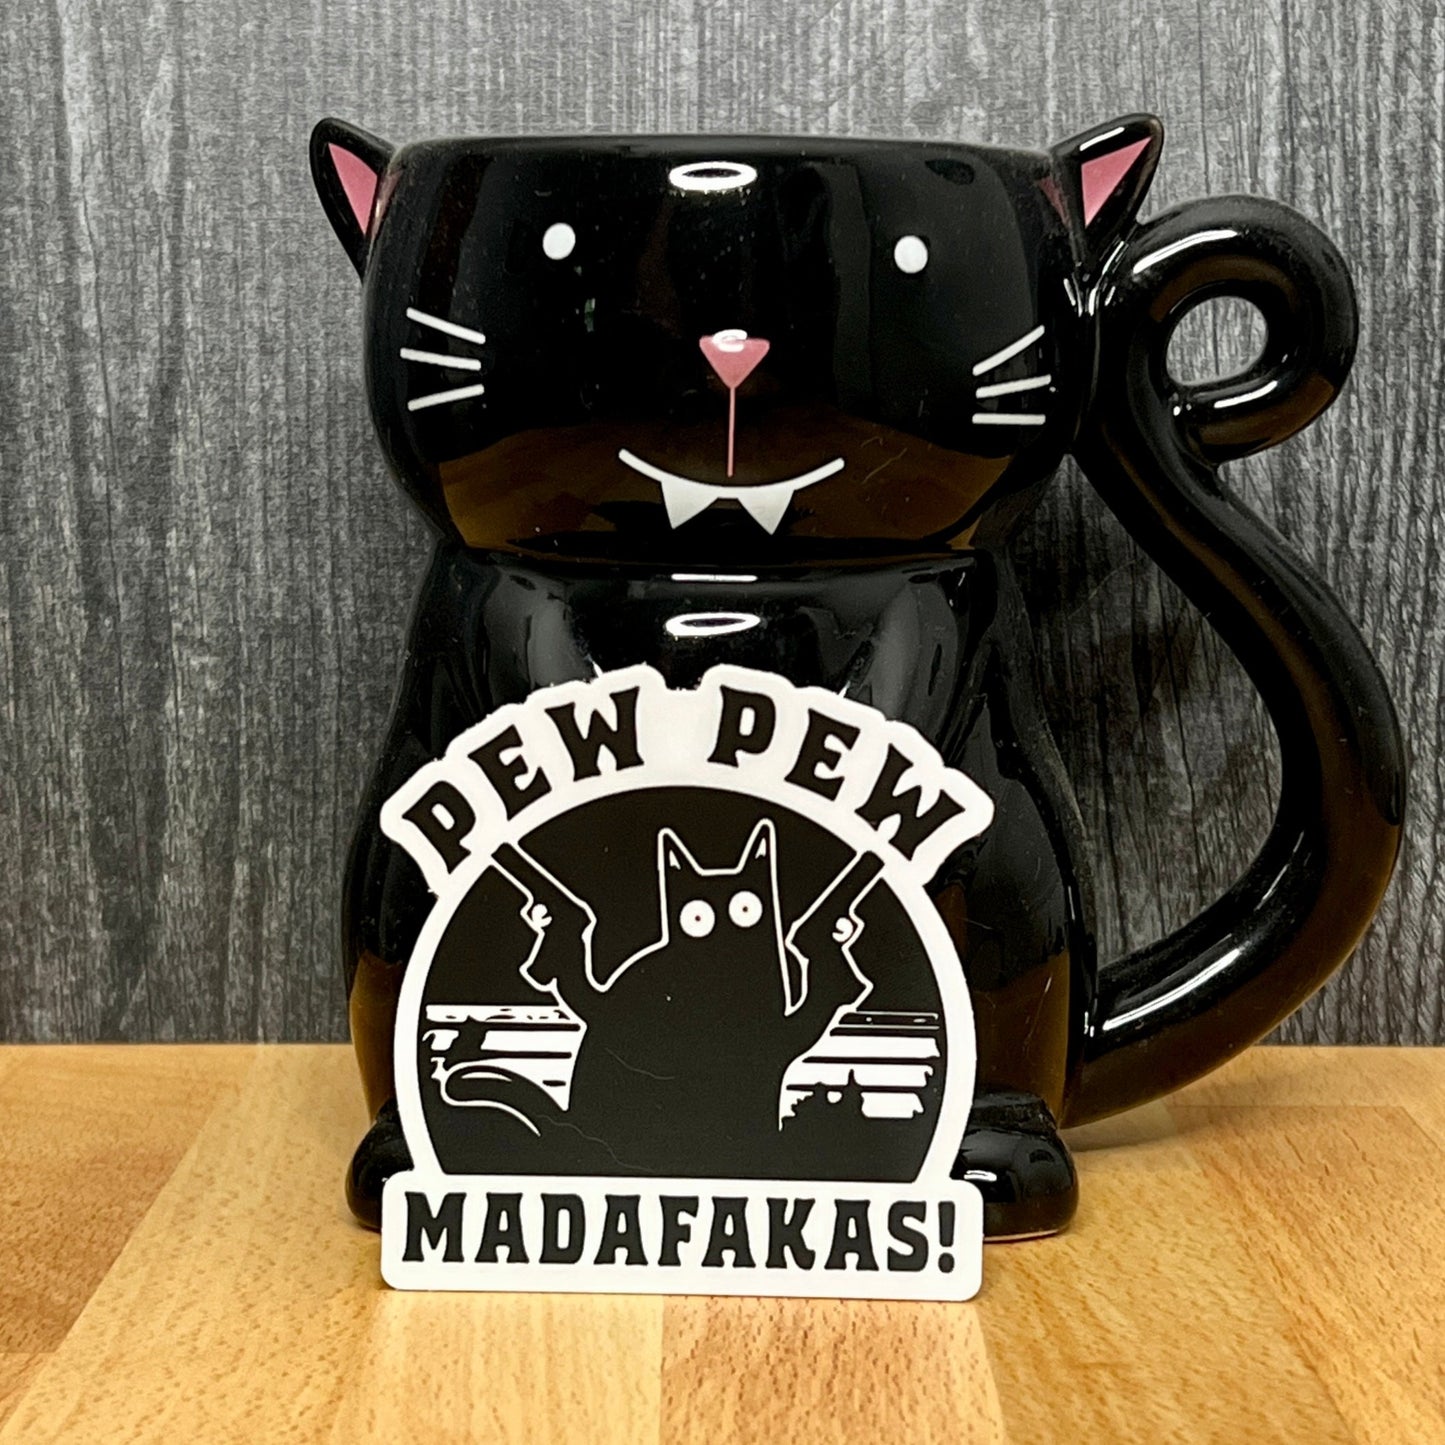 "Pew Pew Madafakas" Cat Waterproof Sticker Decal